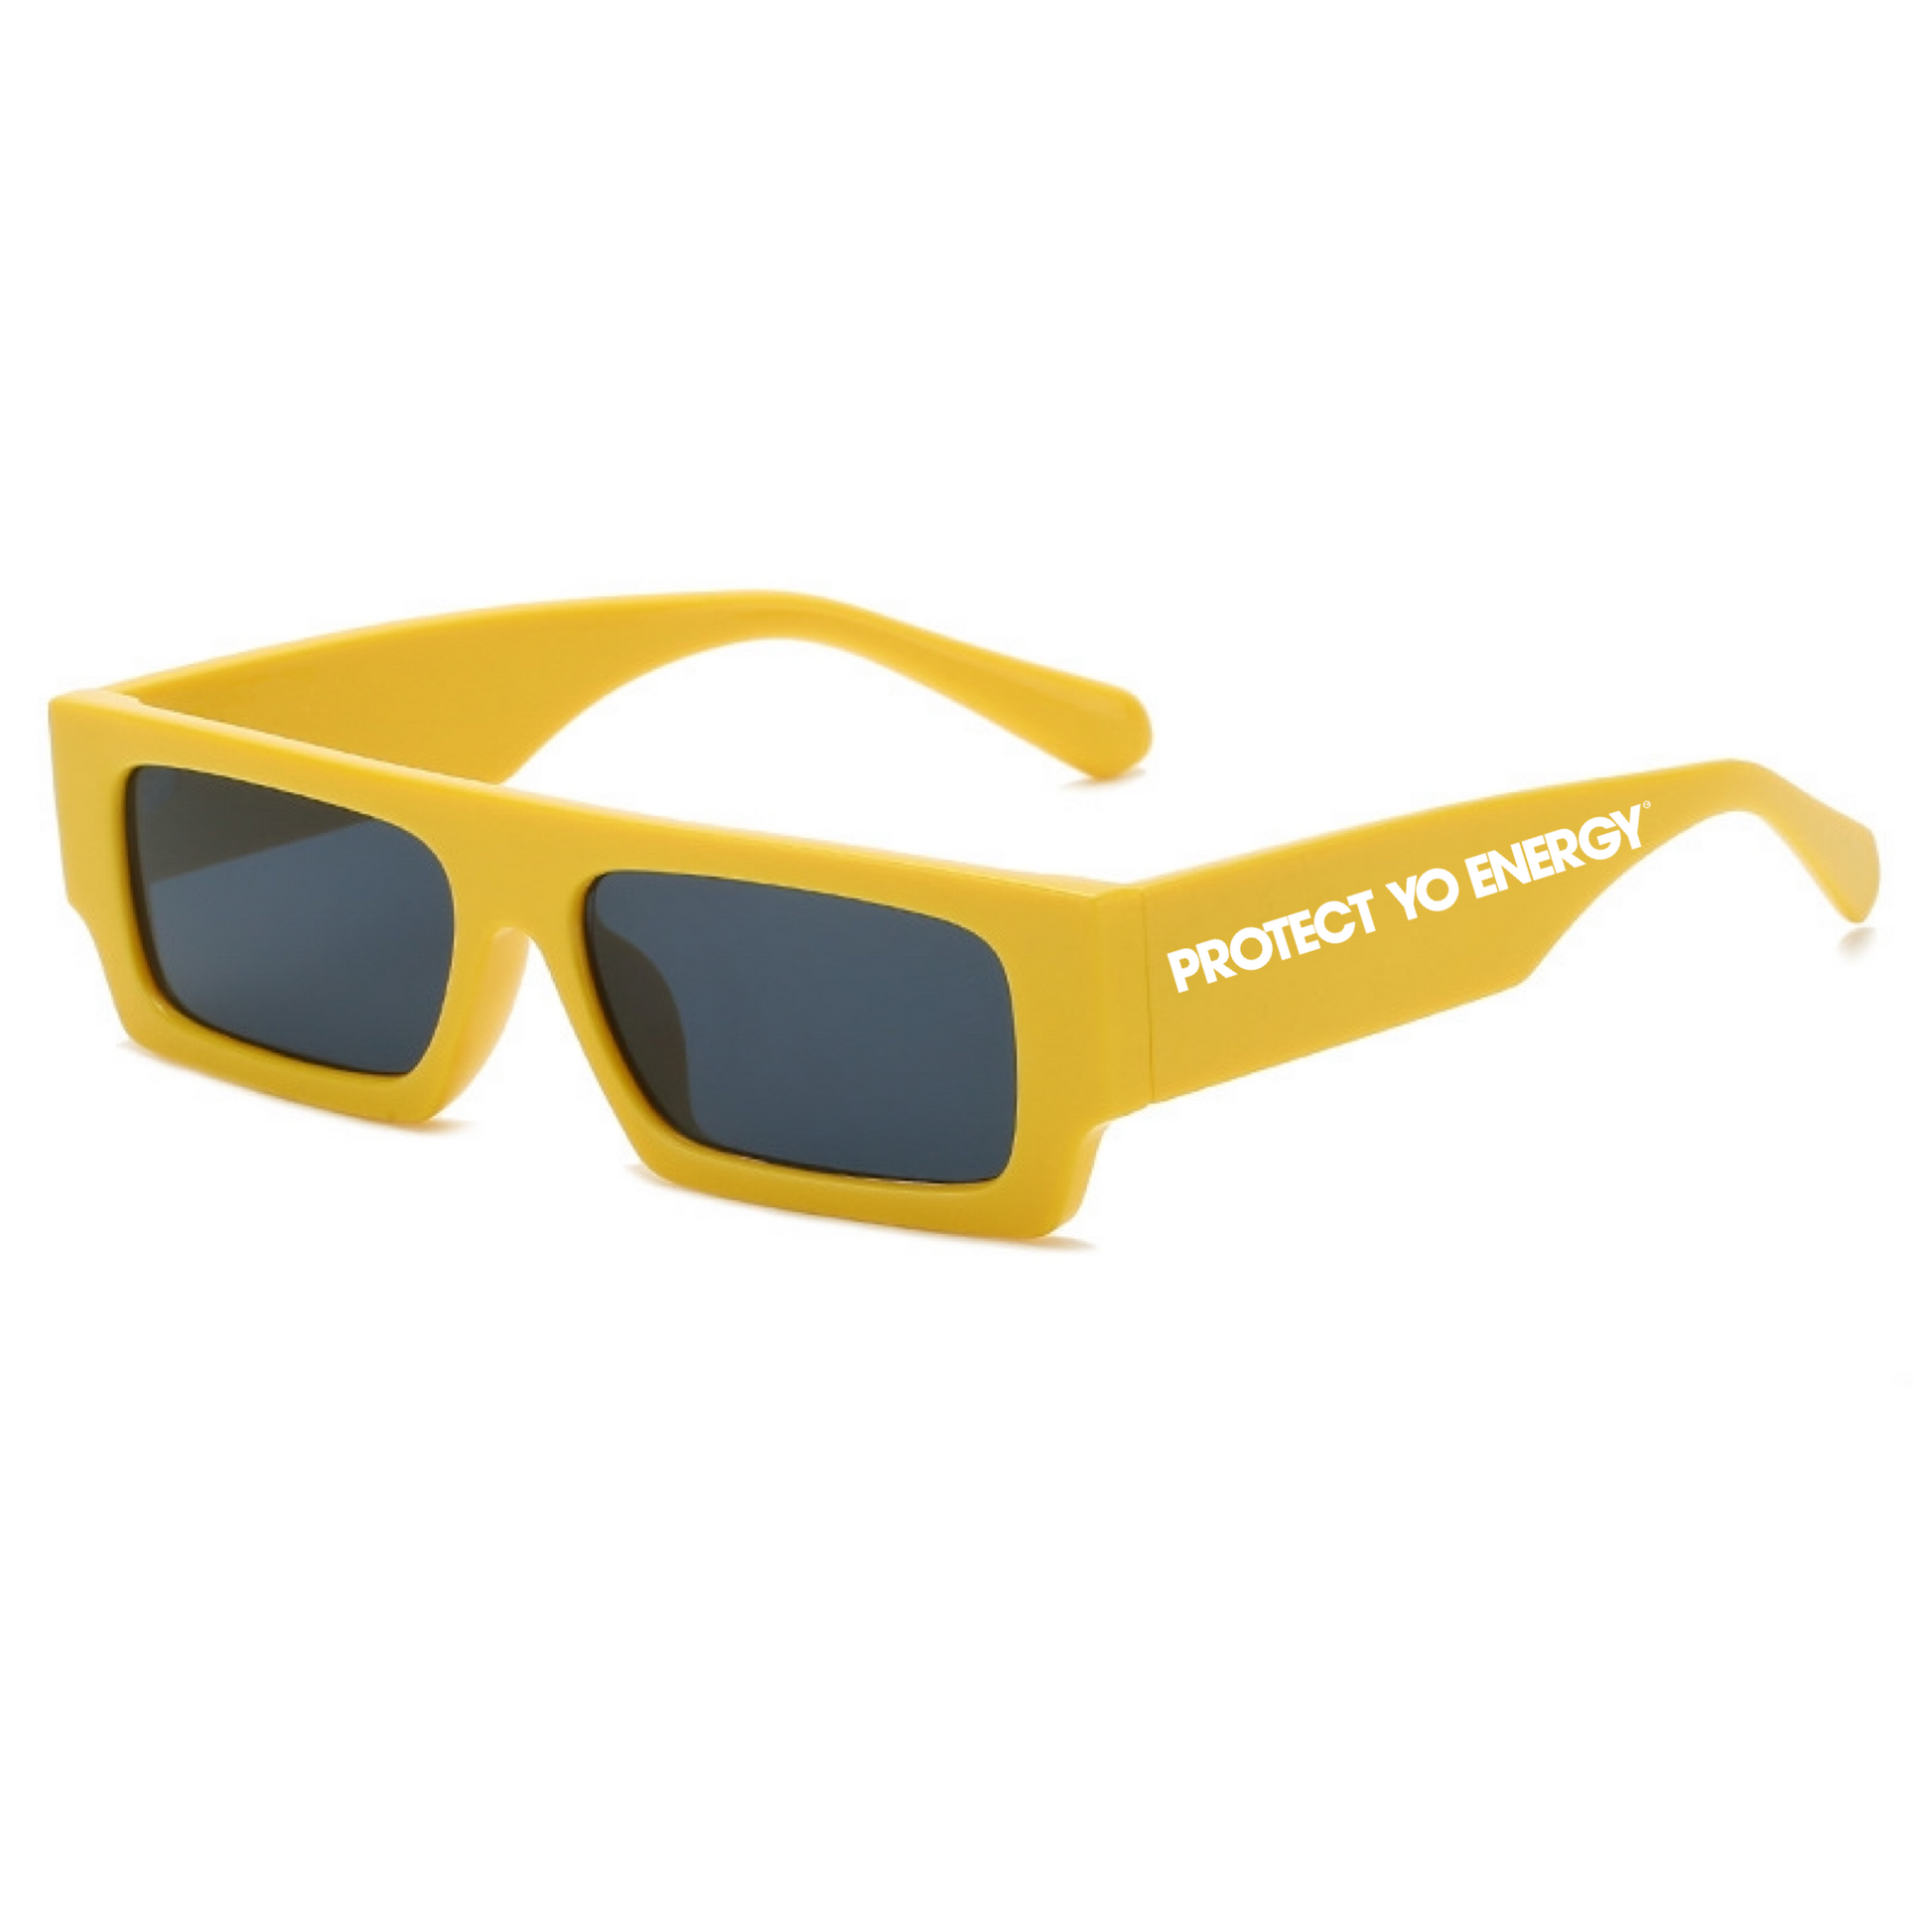 PYE Loc Sunglasses - PROTECT YO ENERGY 